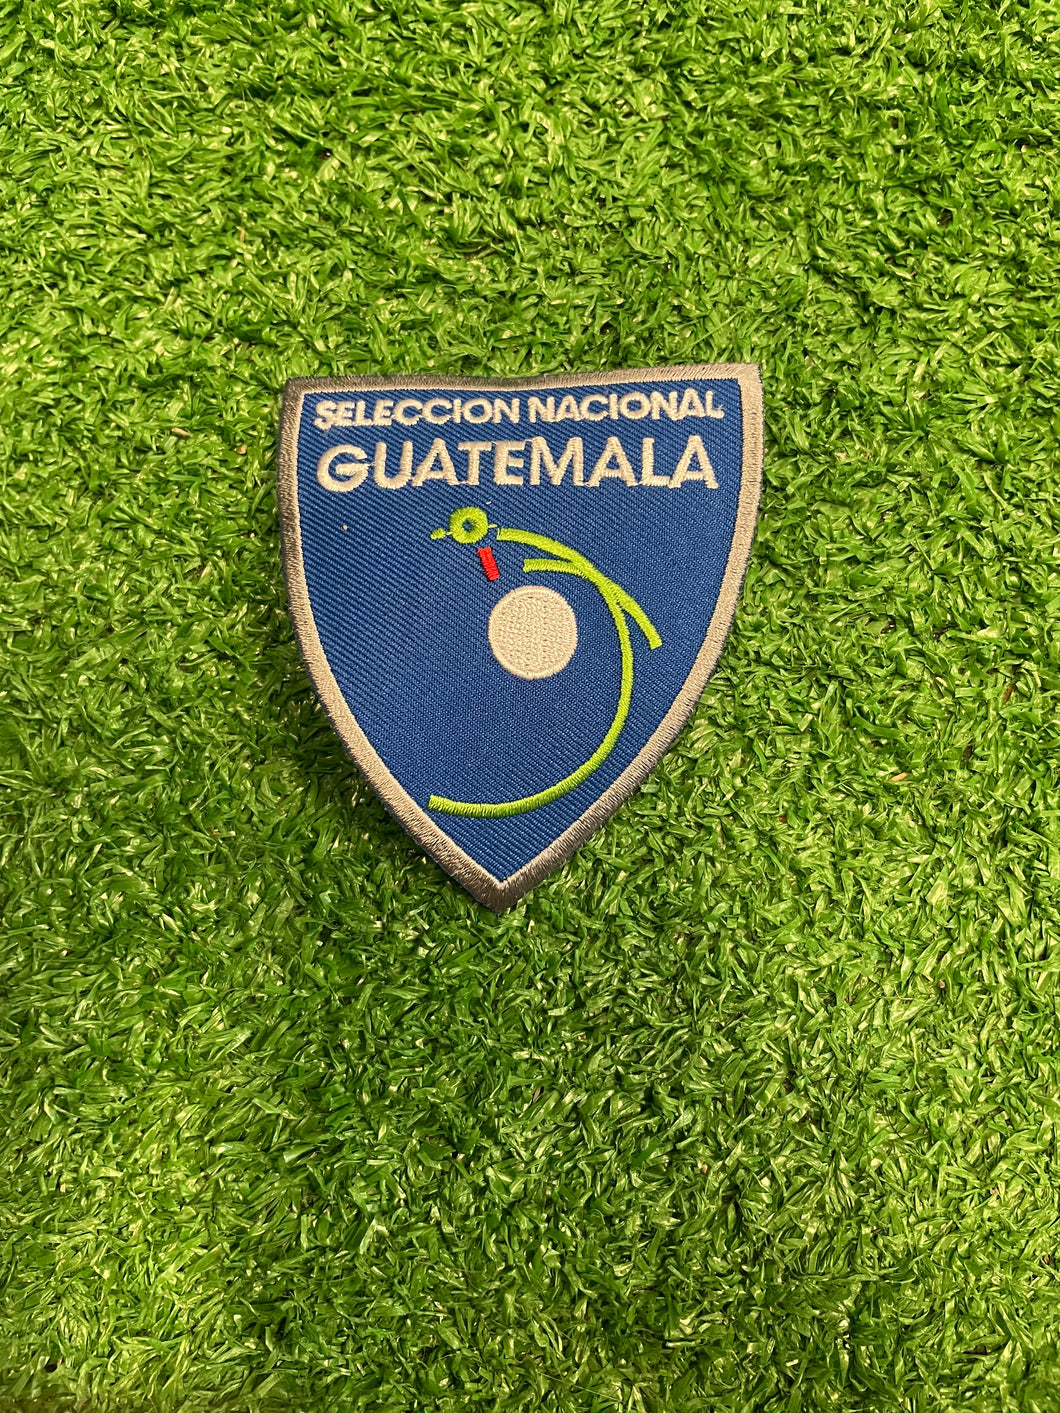 Guatemala Soccer Patch